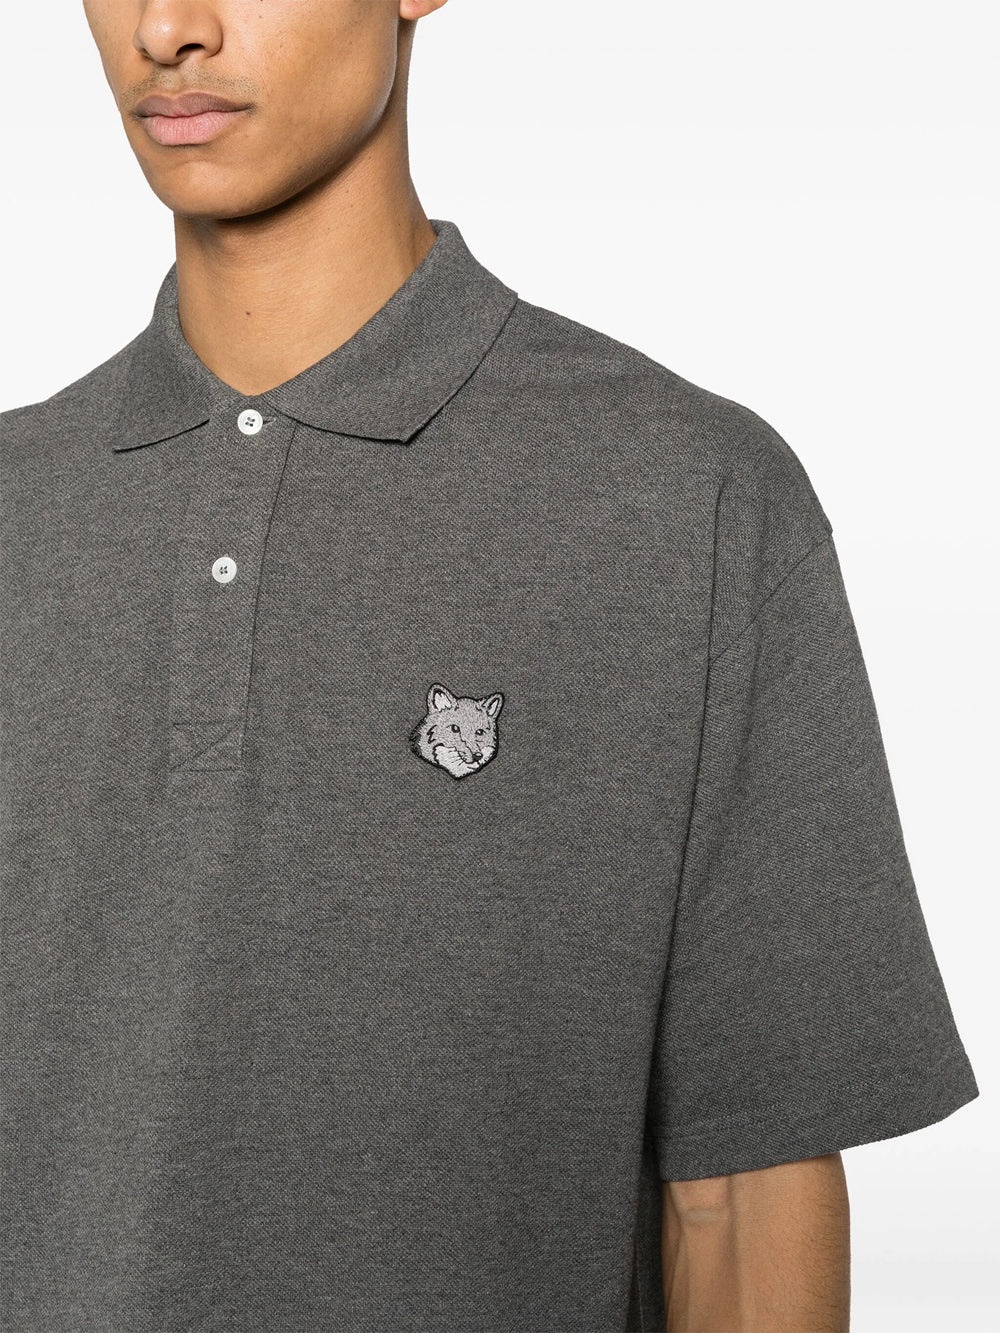 Fox motif polo shirt - 5